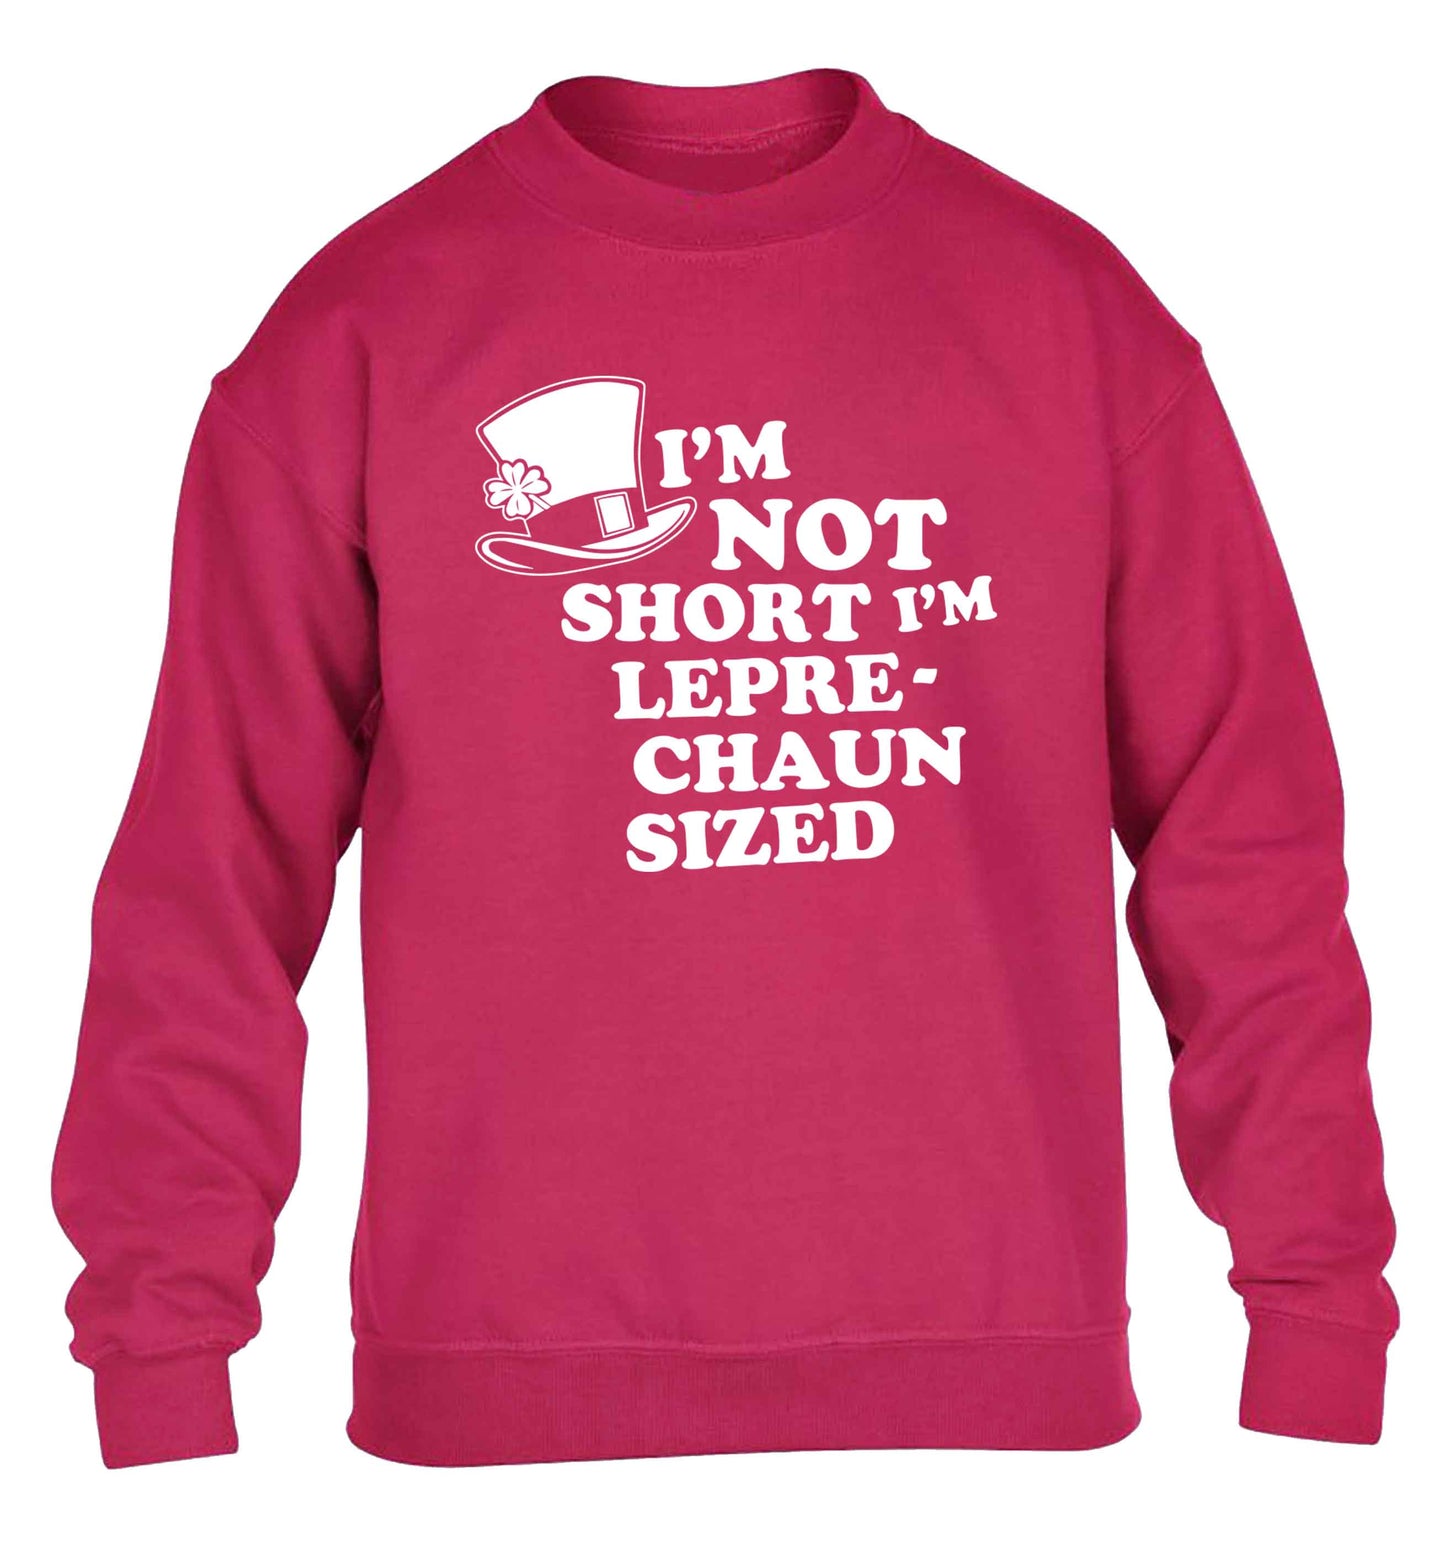 I'm not short I'm leprechaun sized children's pink sweater 12-13 Years